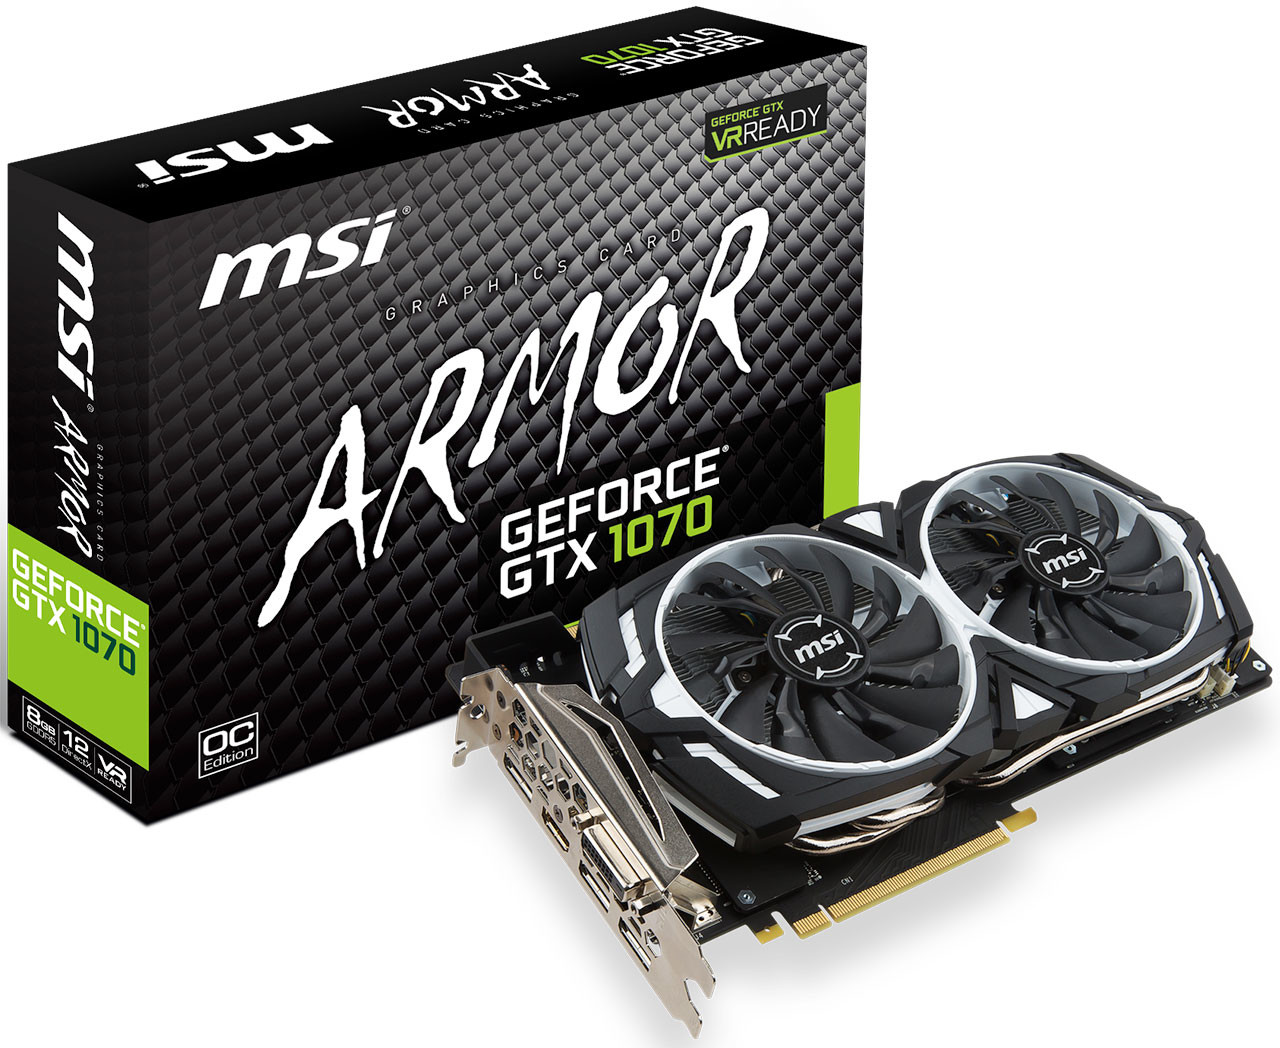 MSI Announces its Full GeForce GTX 1070 